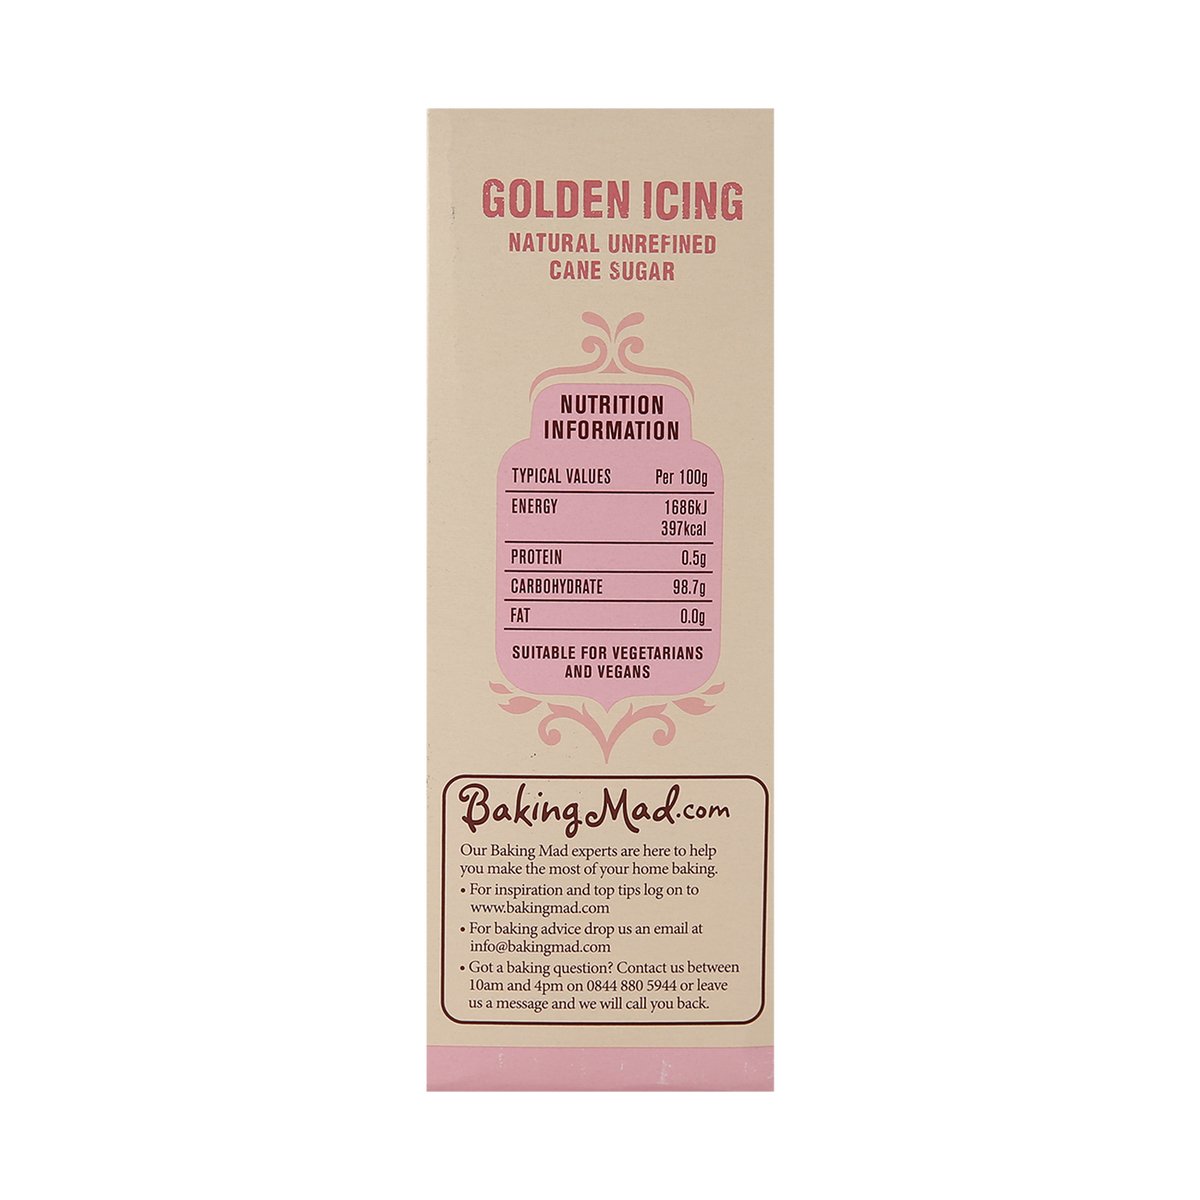 Billington's Golden Icing Sugar 500 g